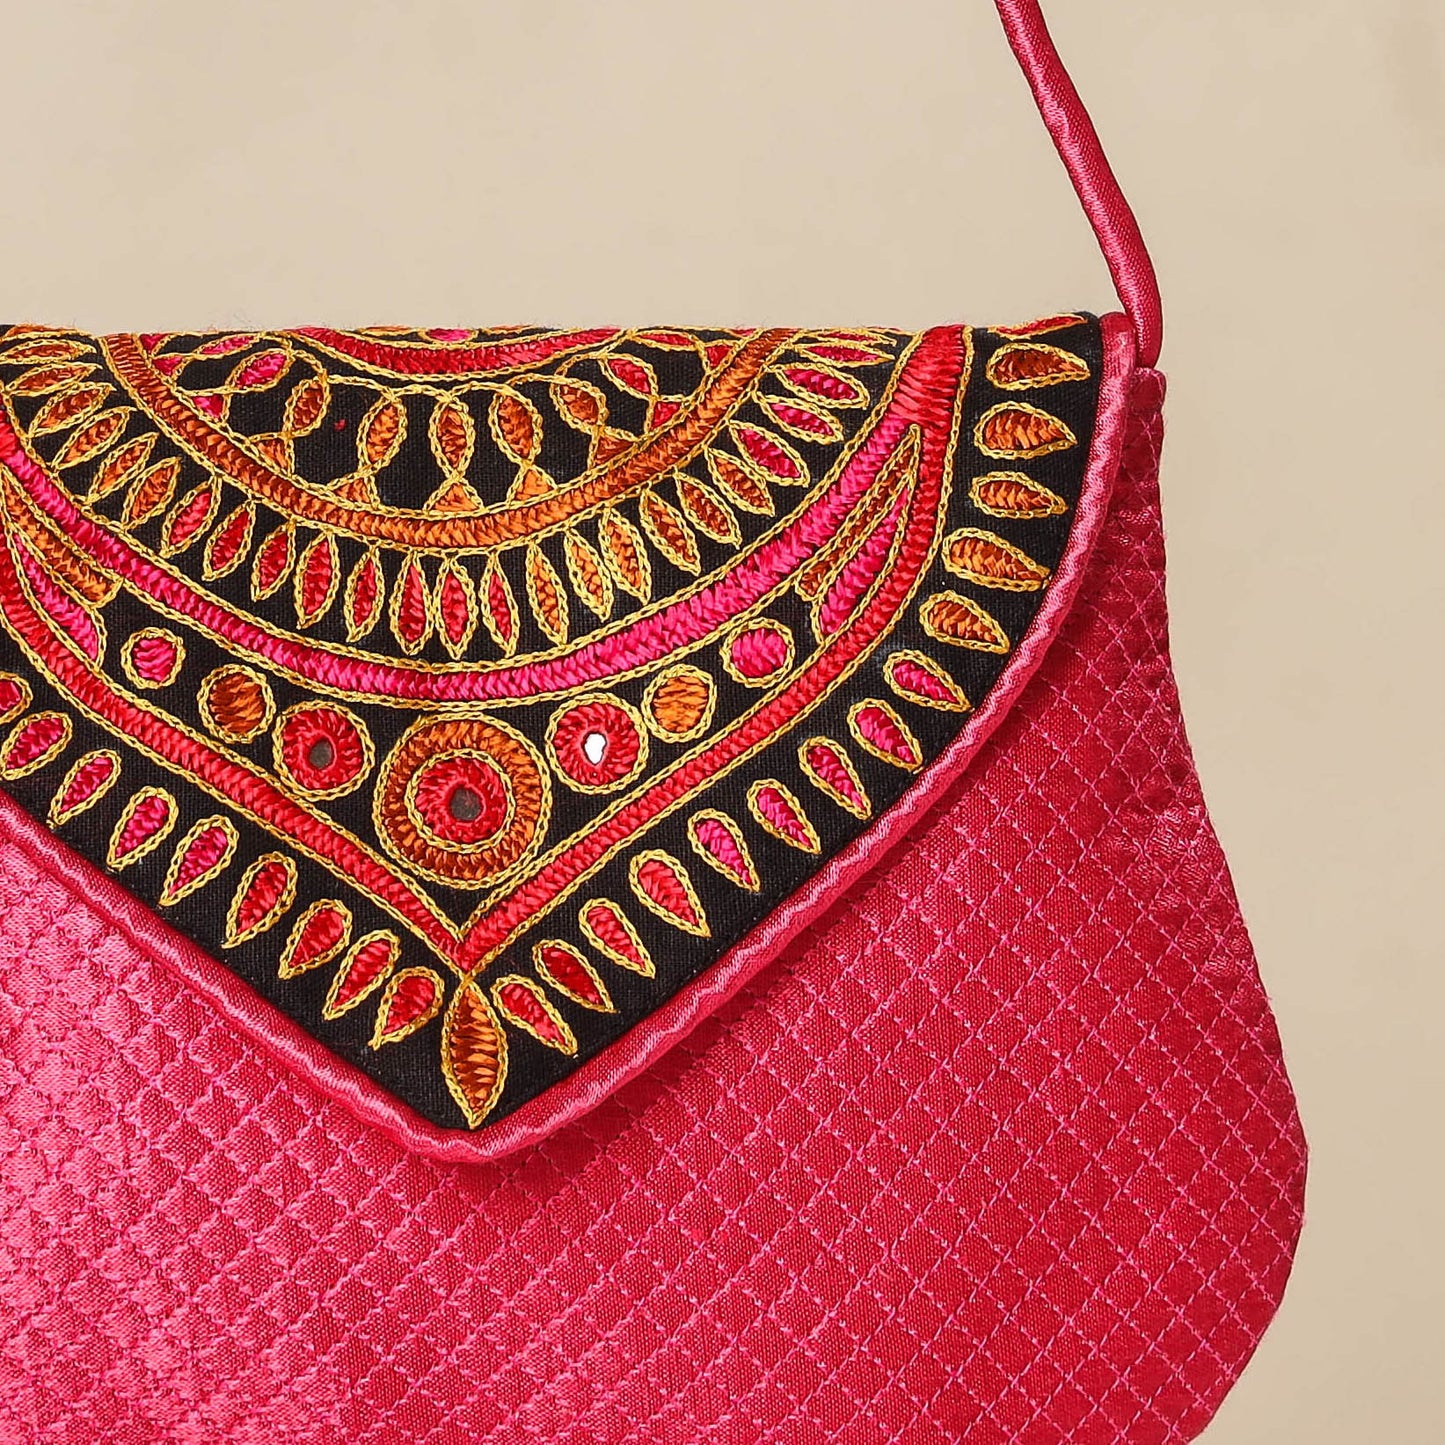 Kutch Ahir Embroidery Mashru Silk Hand Bag